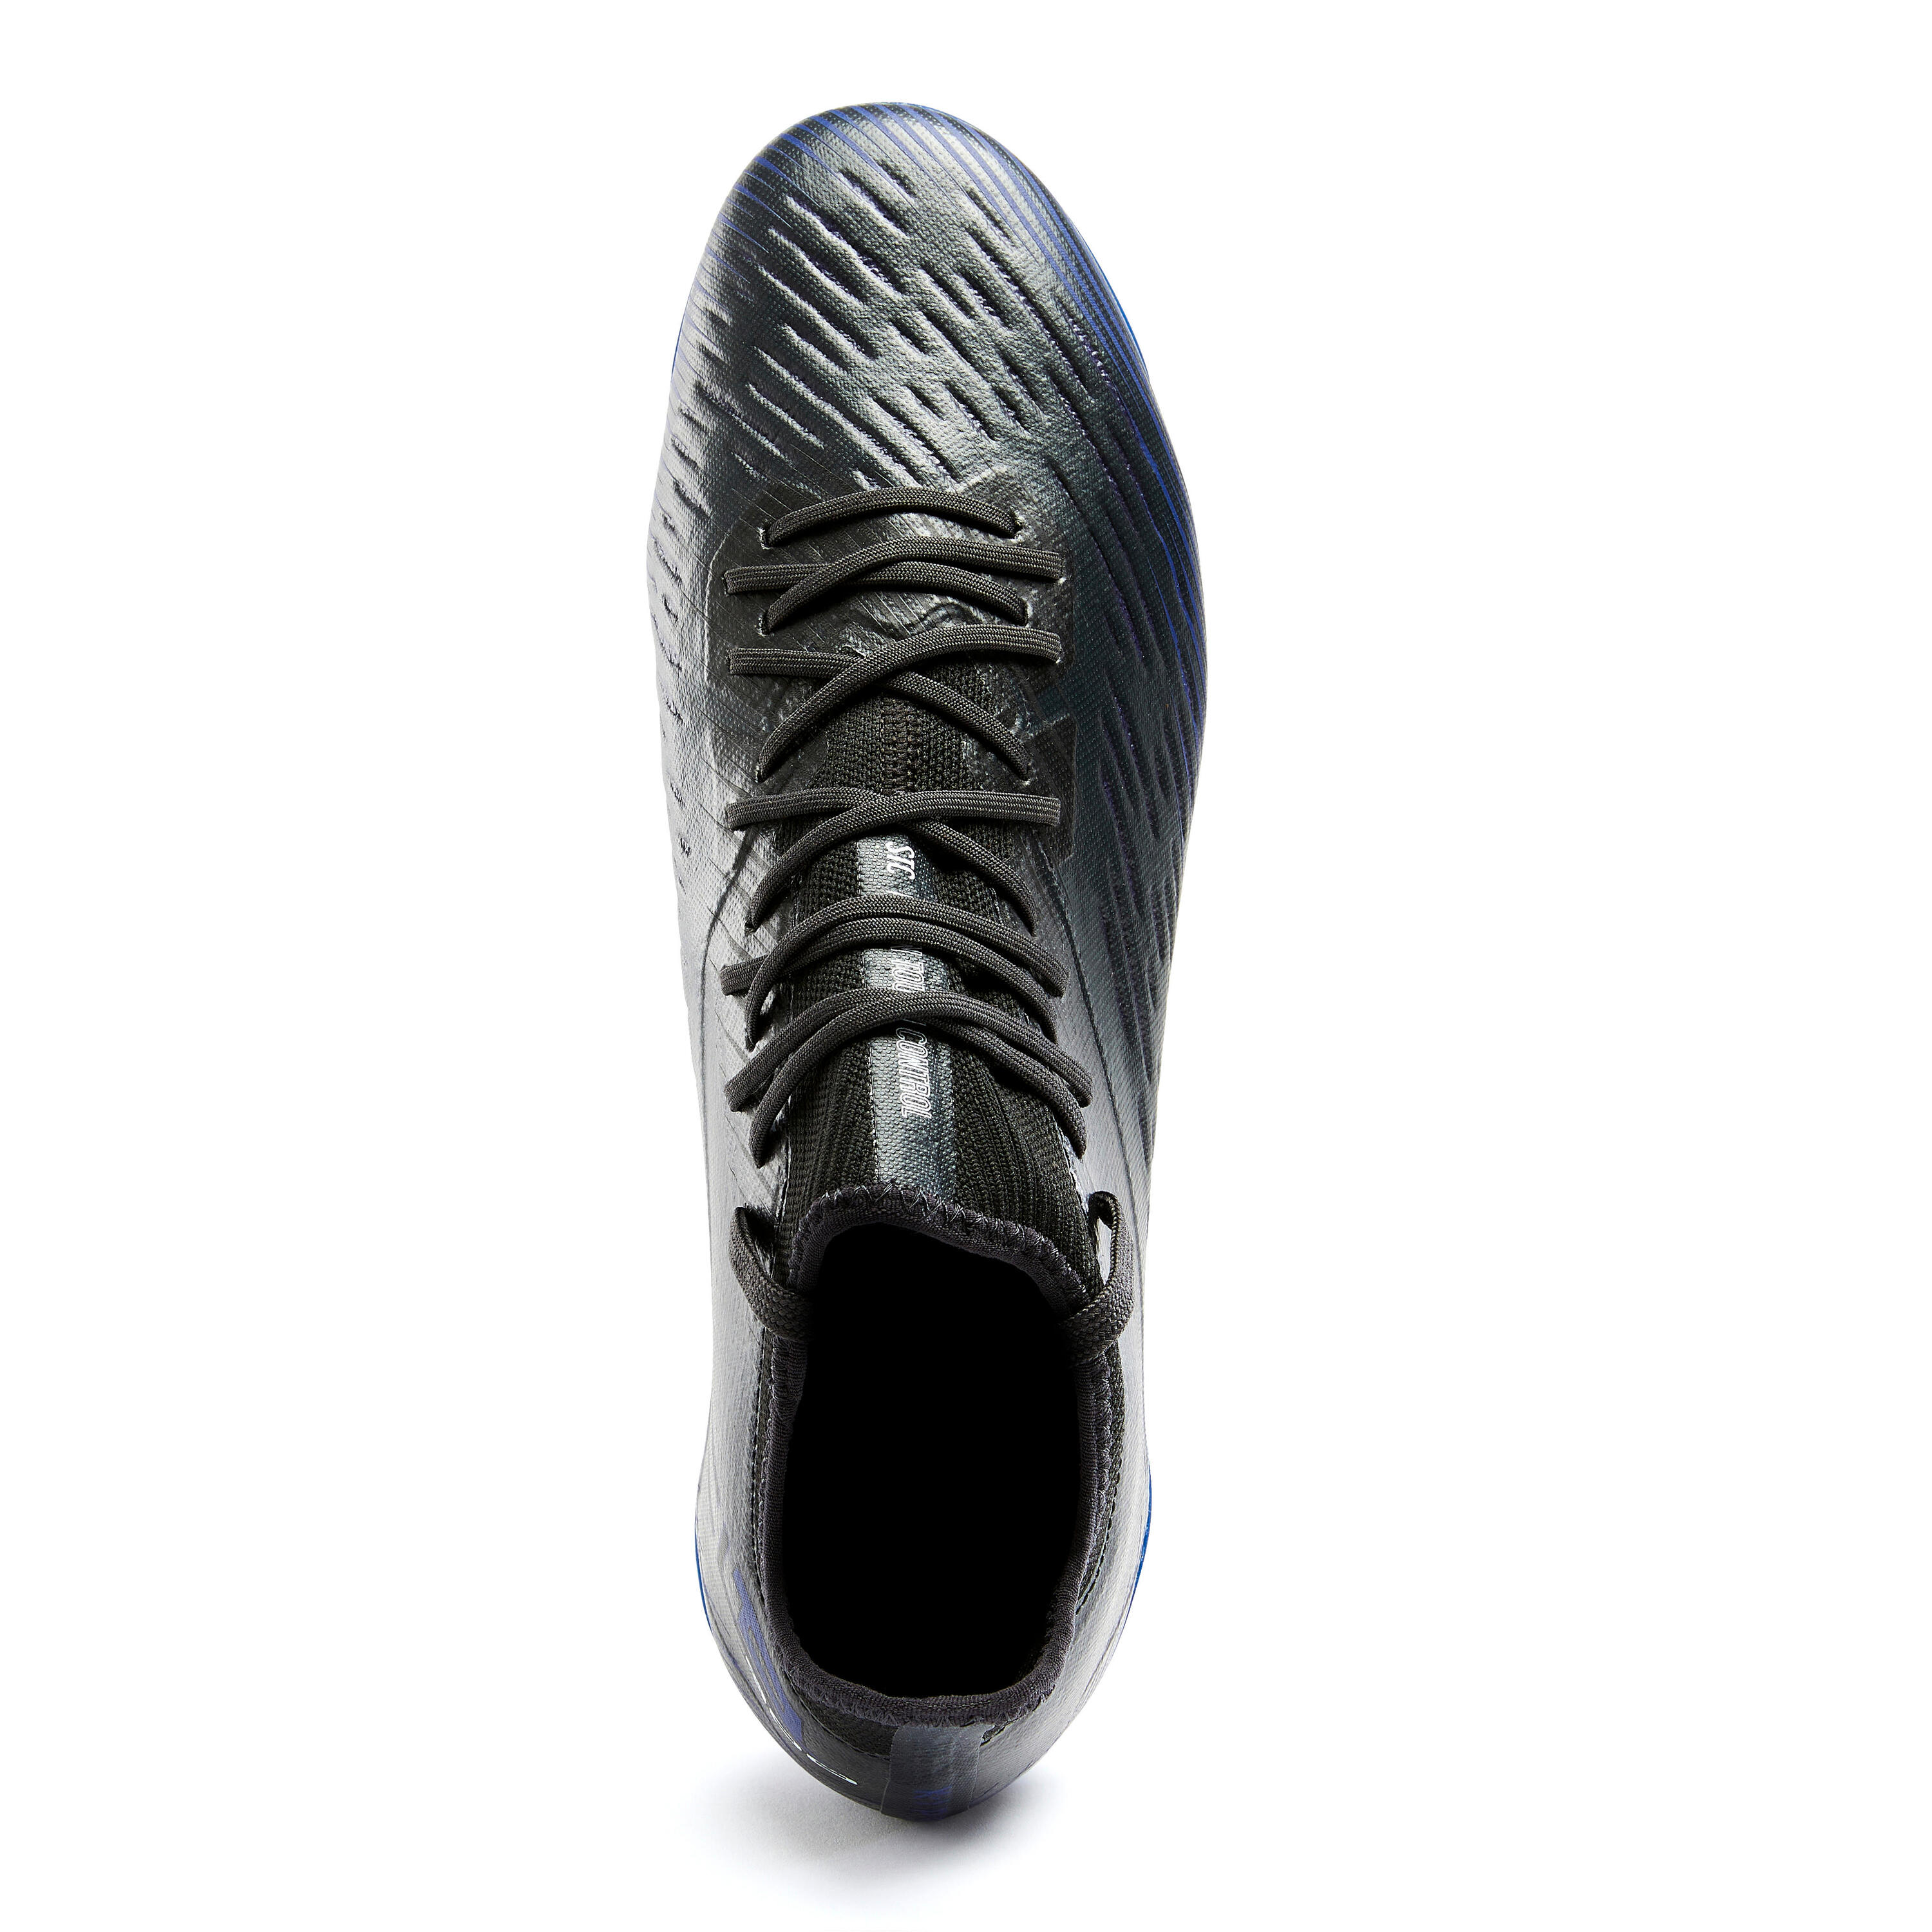 Adult Soft Ground Football Boots CLR SG - Black/Blue 6/8